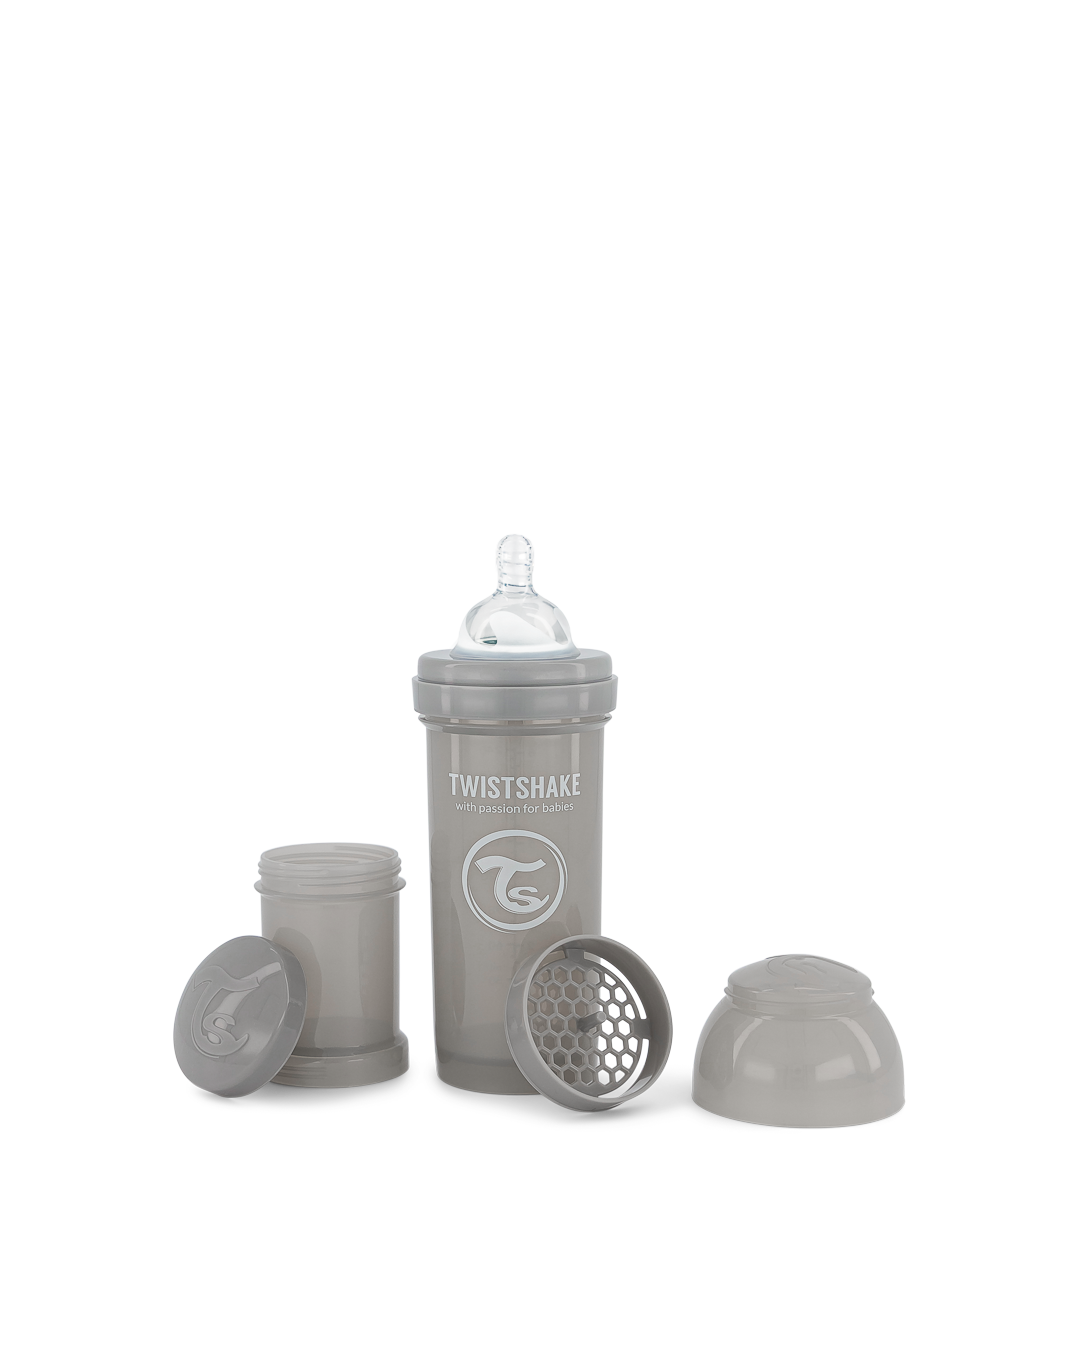 Anti-Colic Baby Bottle - 260ml | MamasHero KSA